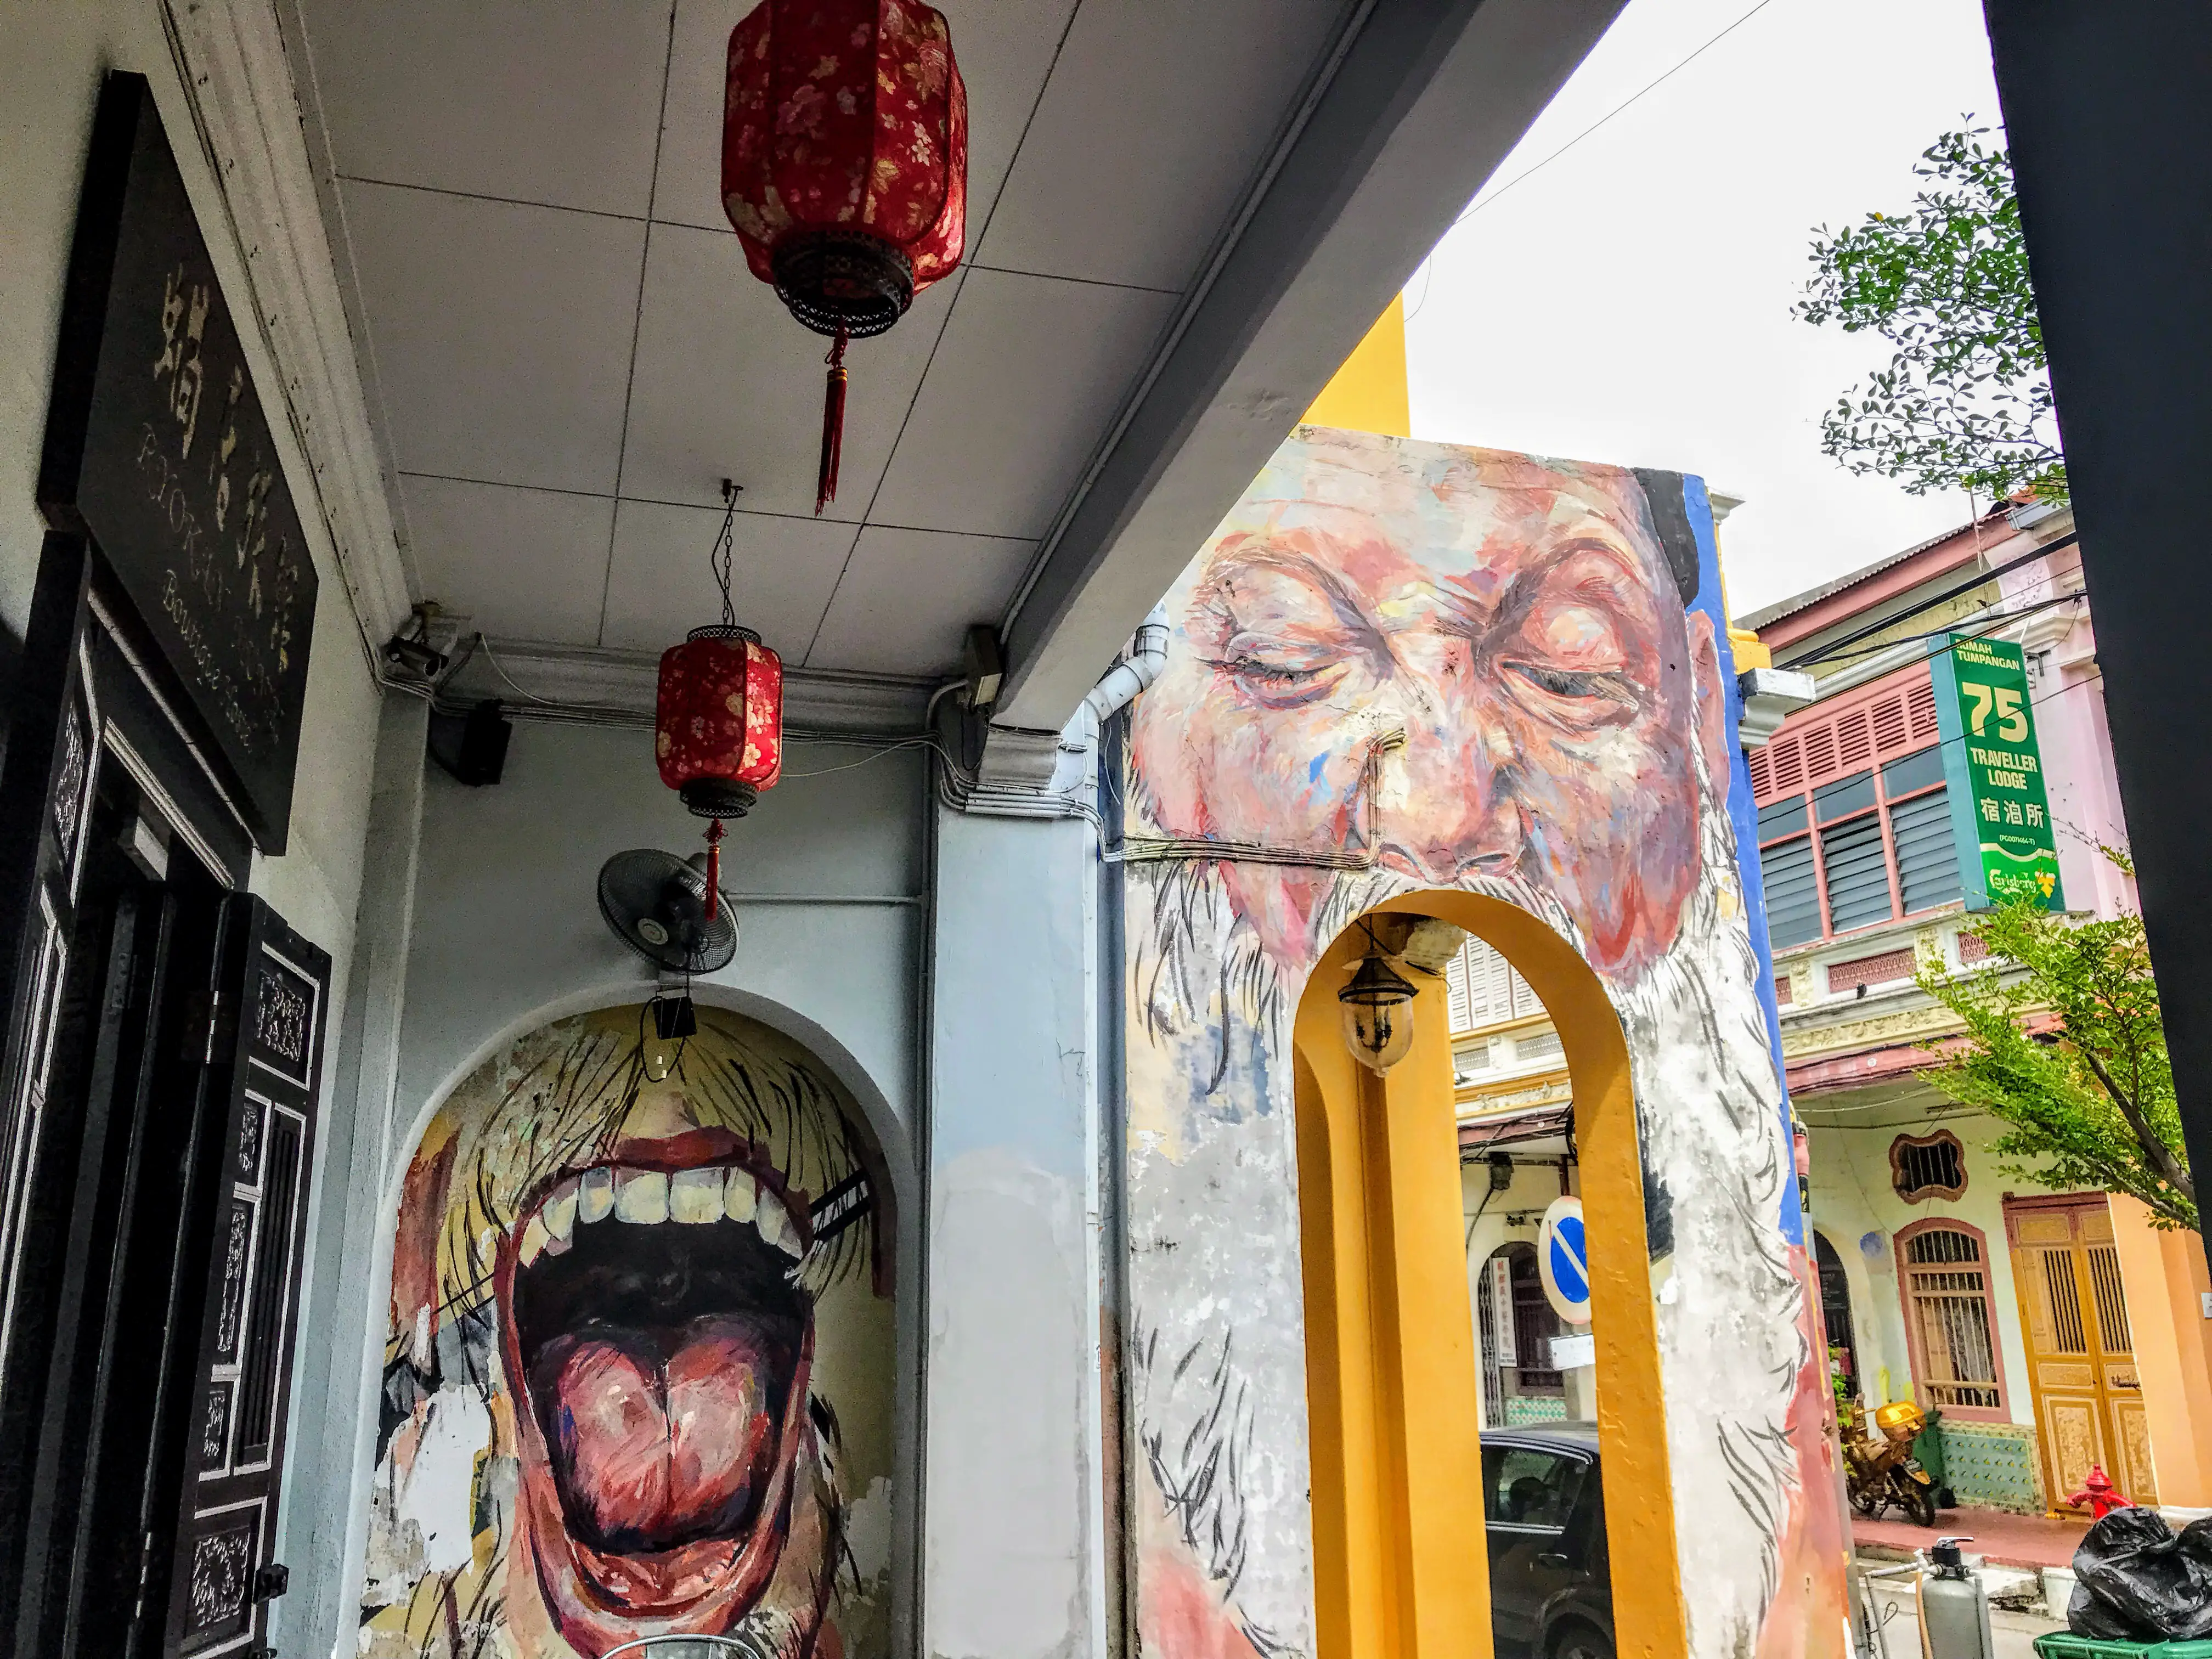 George Town street art, Penang, Malaysia 